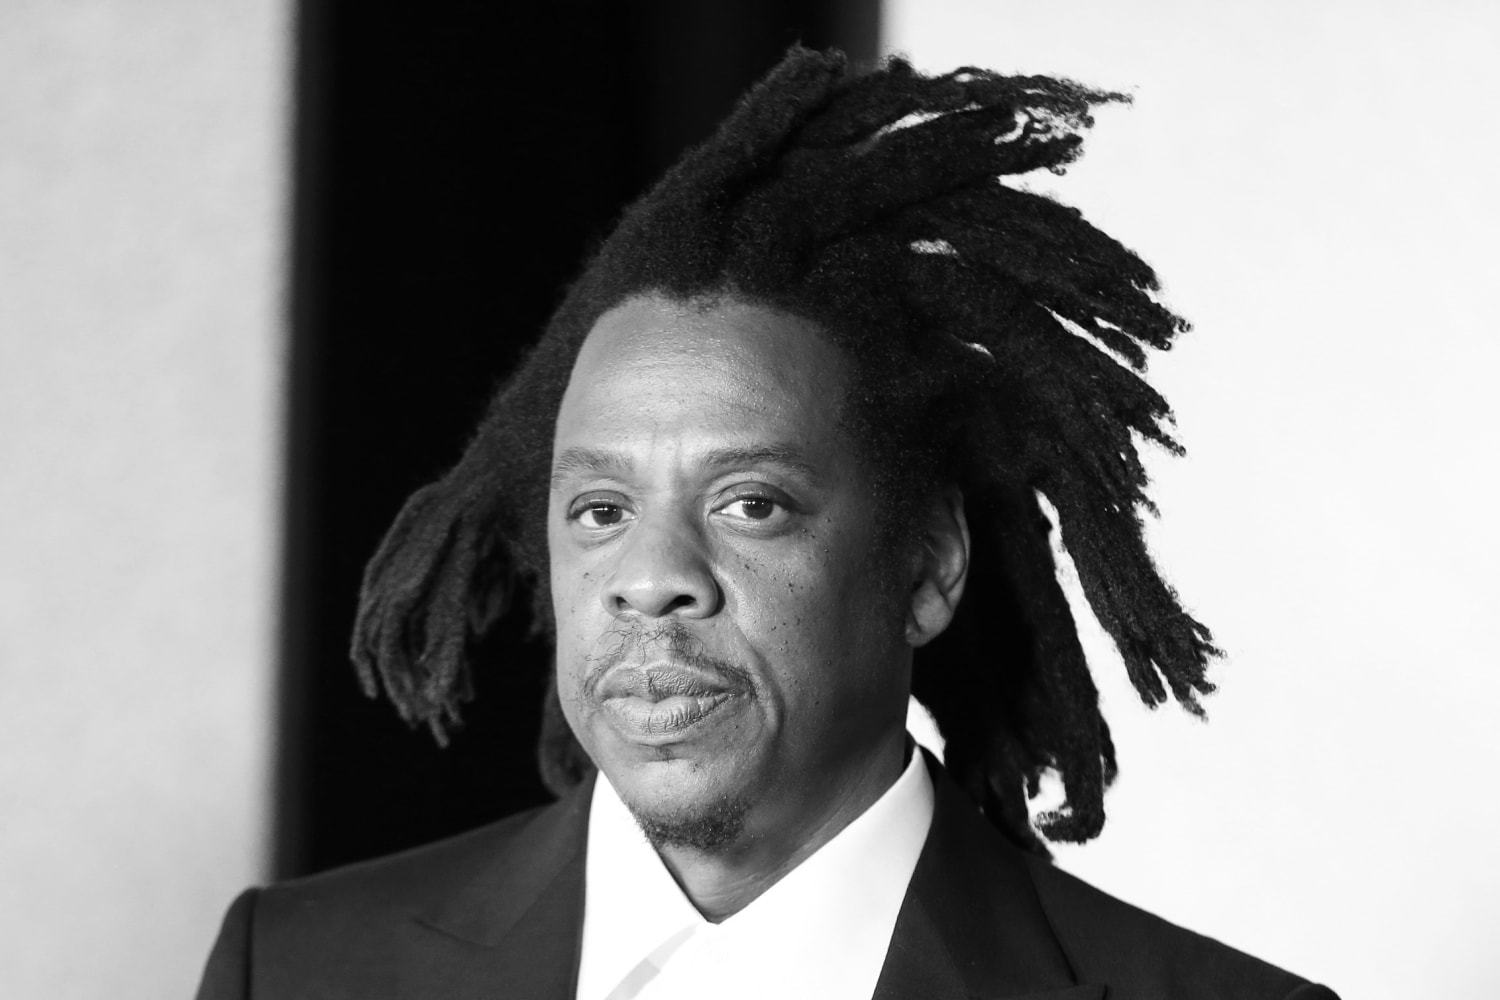 ‘No excuse’: Jay-Z’s Team Roc puts pressure on DOJ to investigate Kansas City police